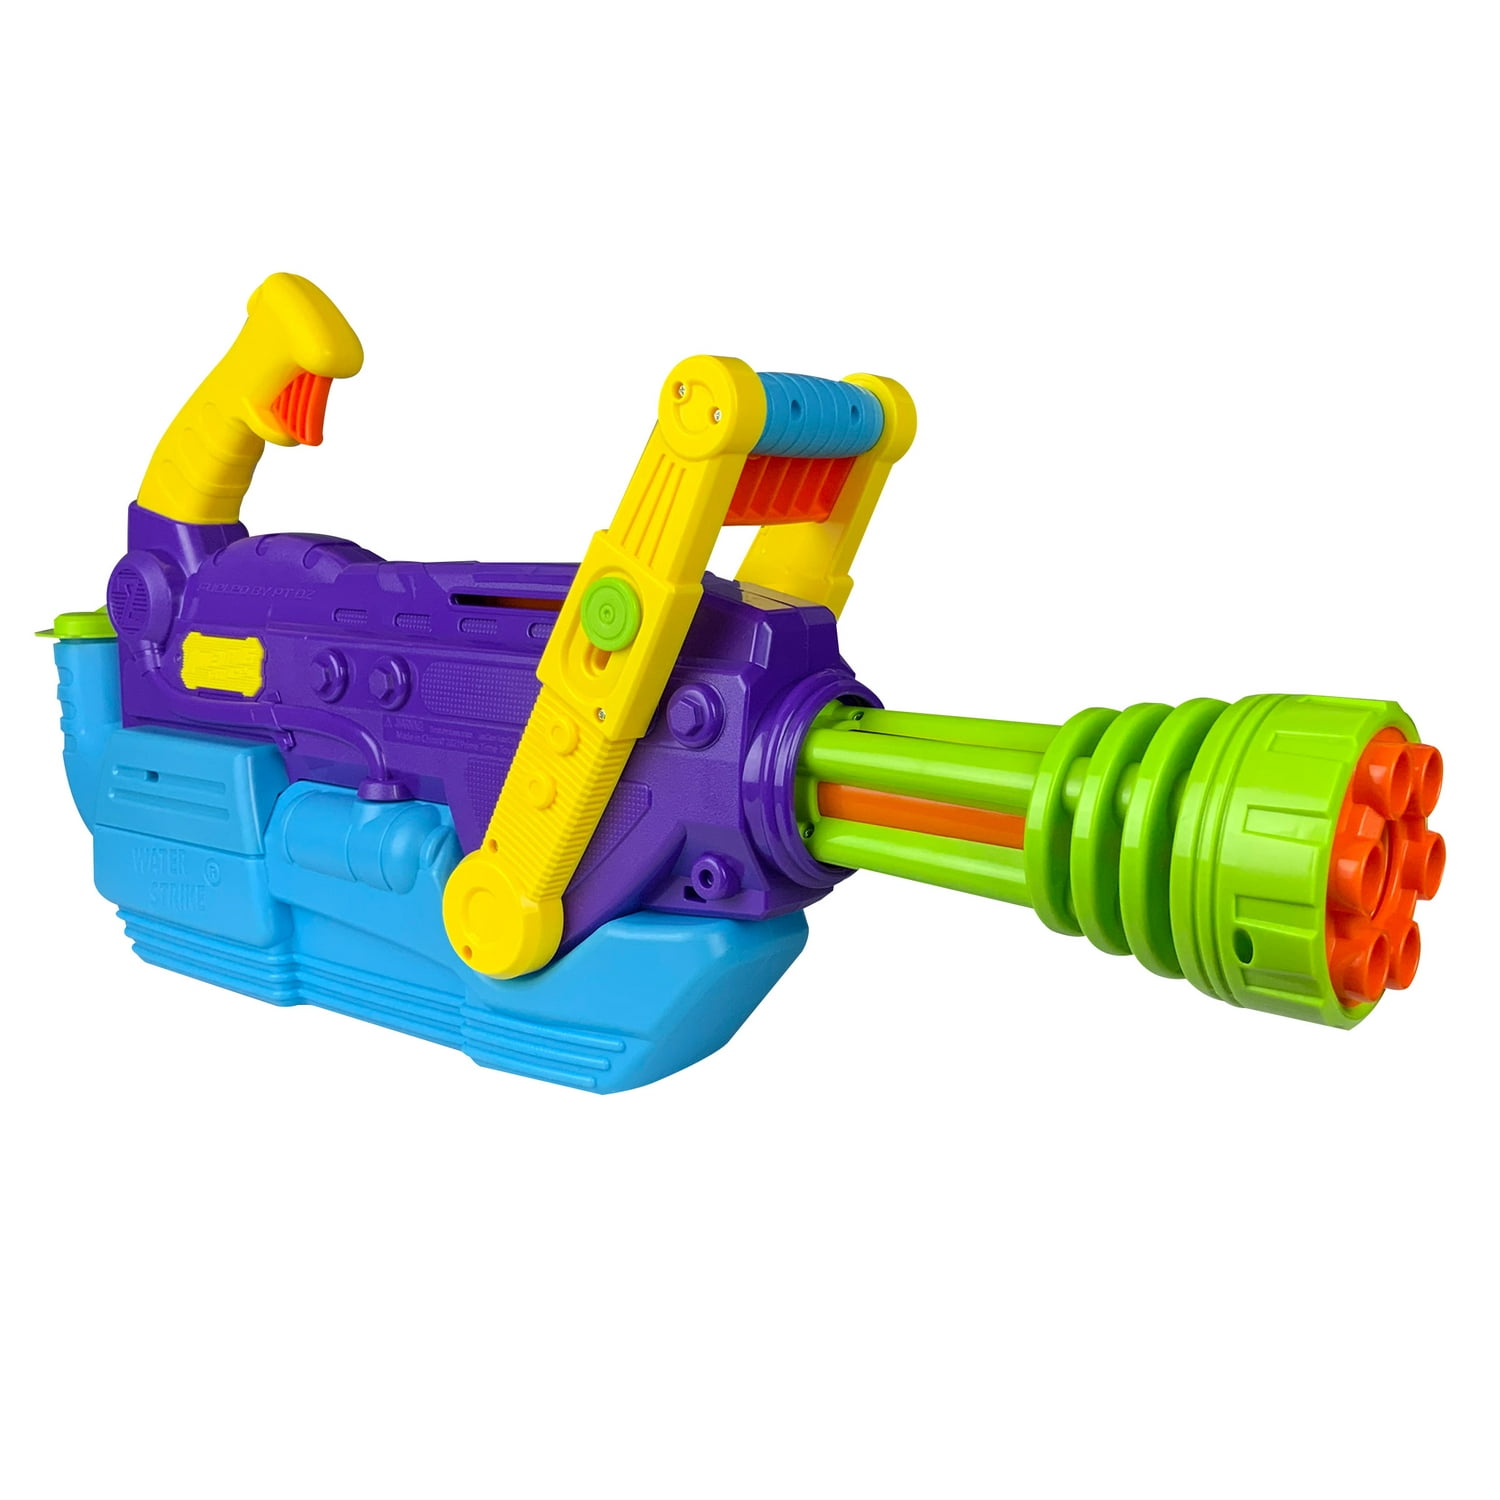 Adventure Force Water Strike Water Blaster Toy $6.32 + Free S&H w/ Walmart+ or $35+